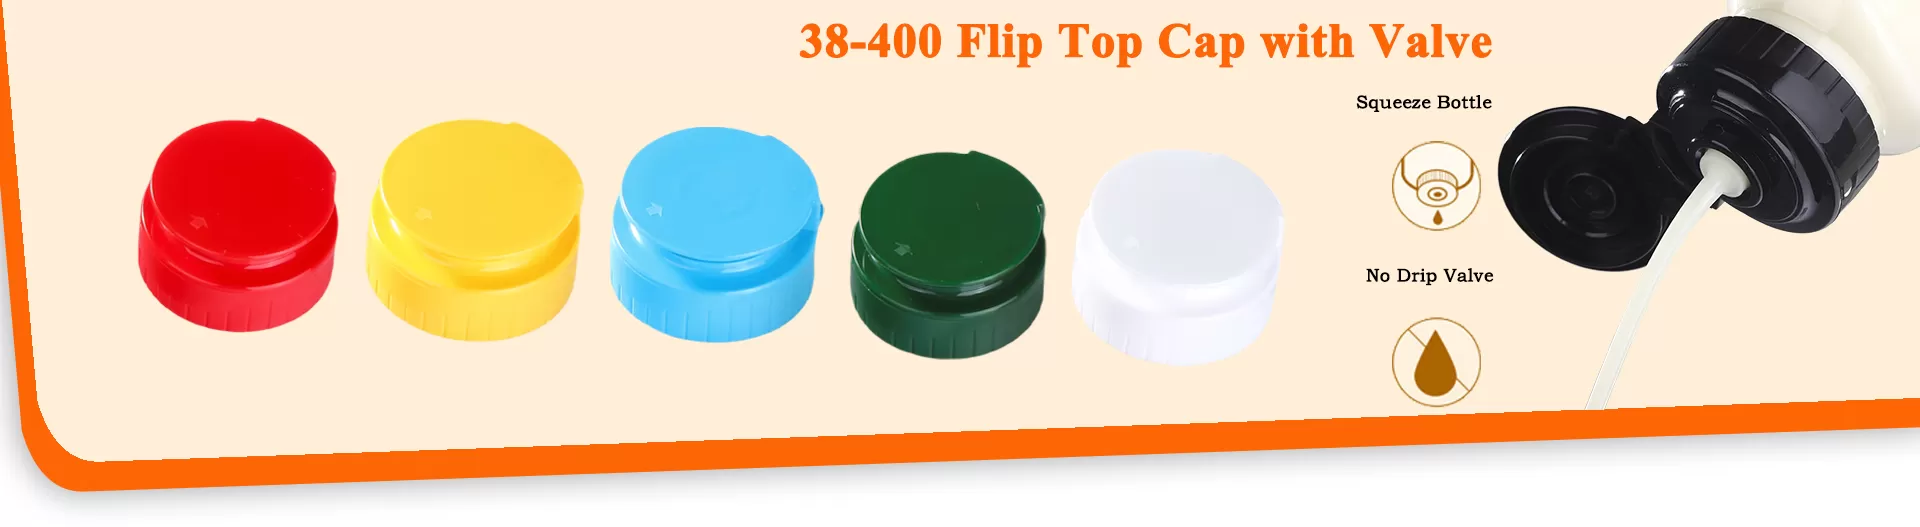 Flip Top Cap